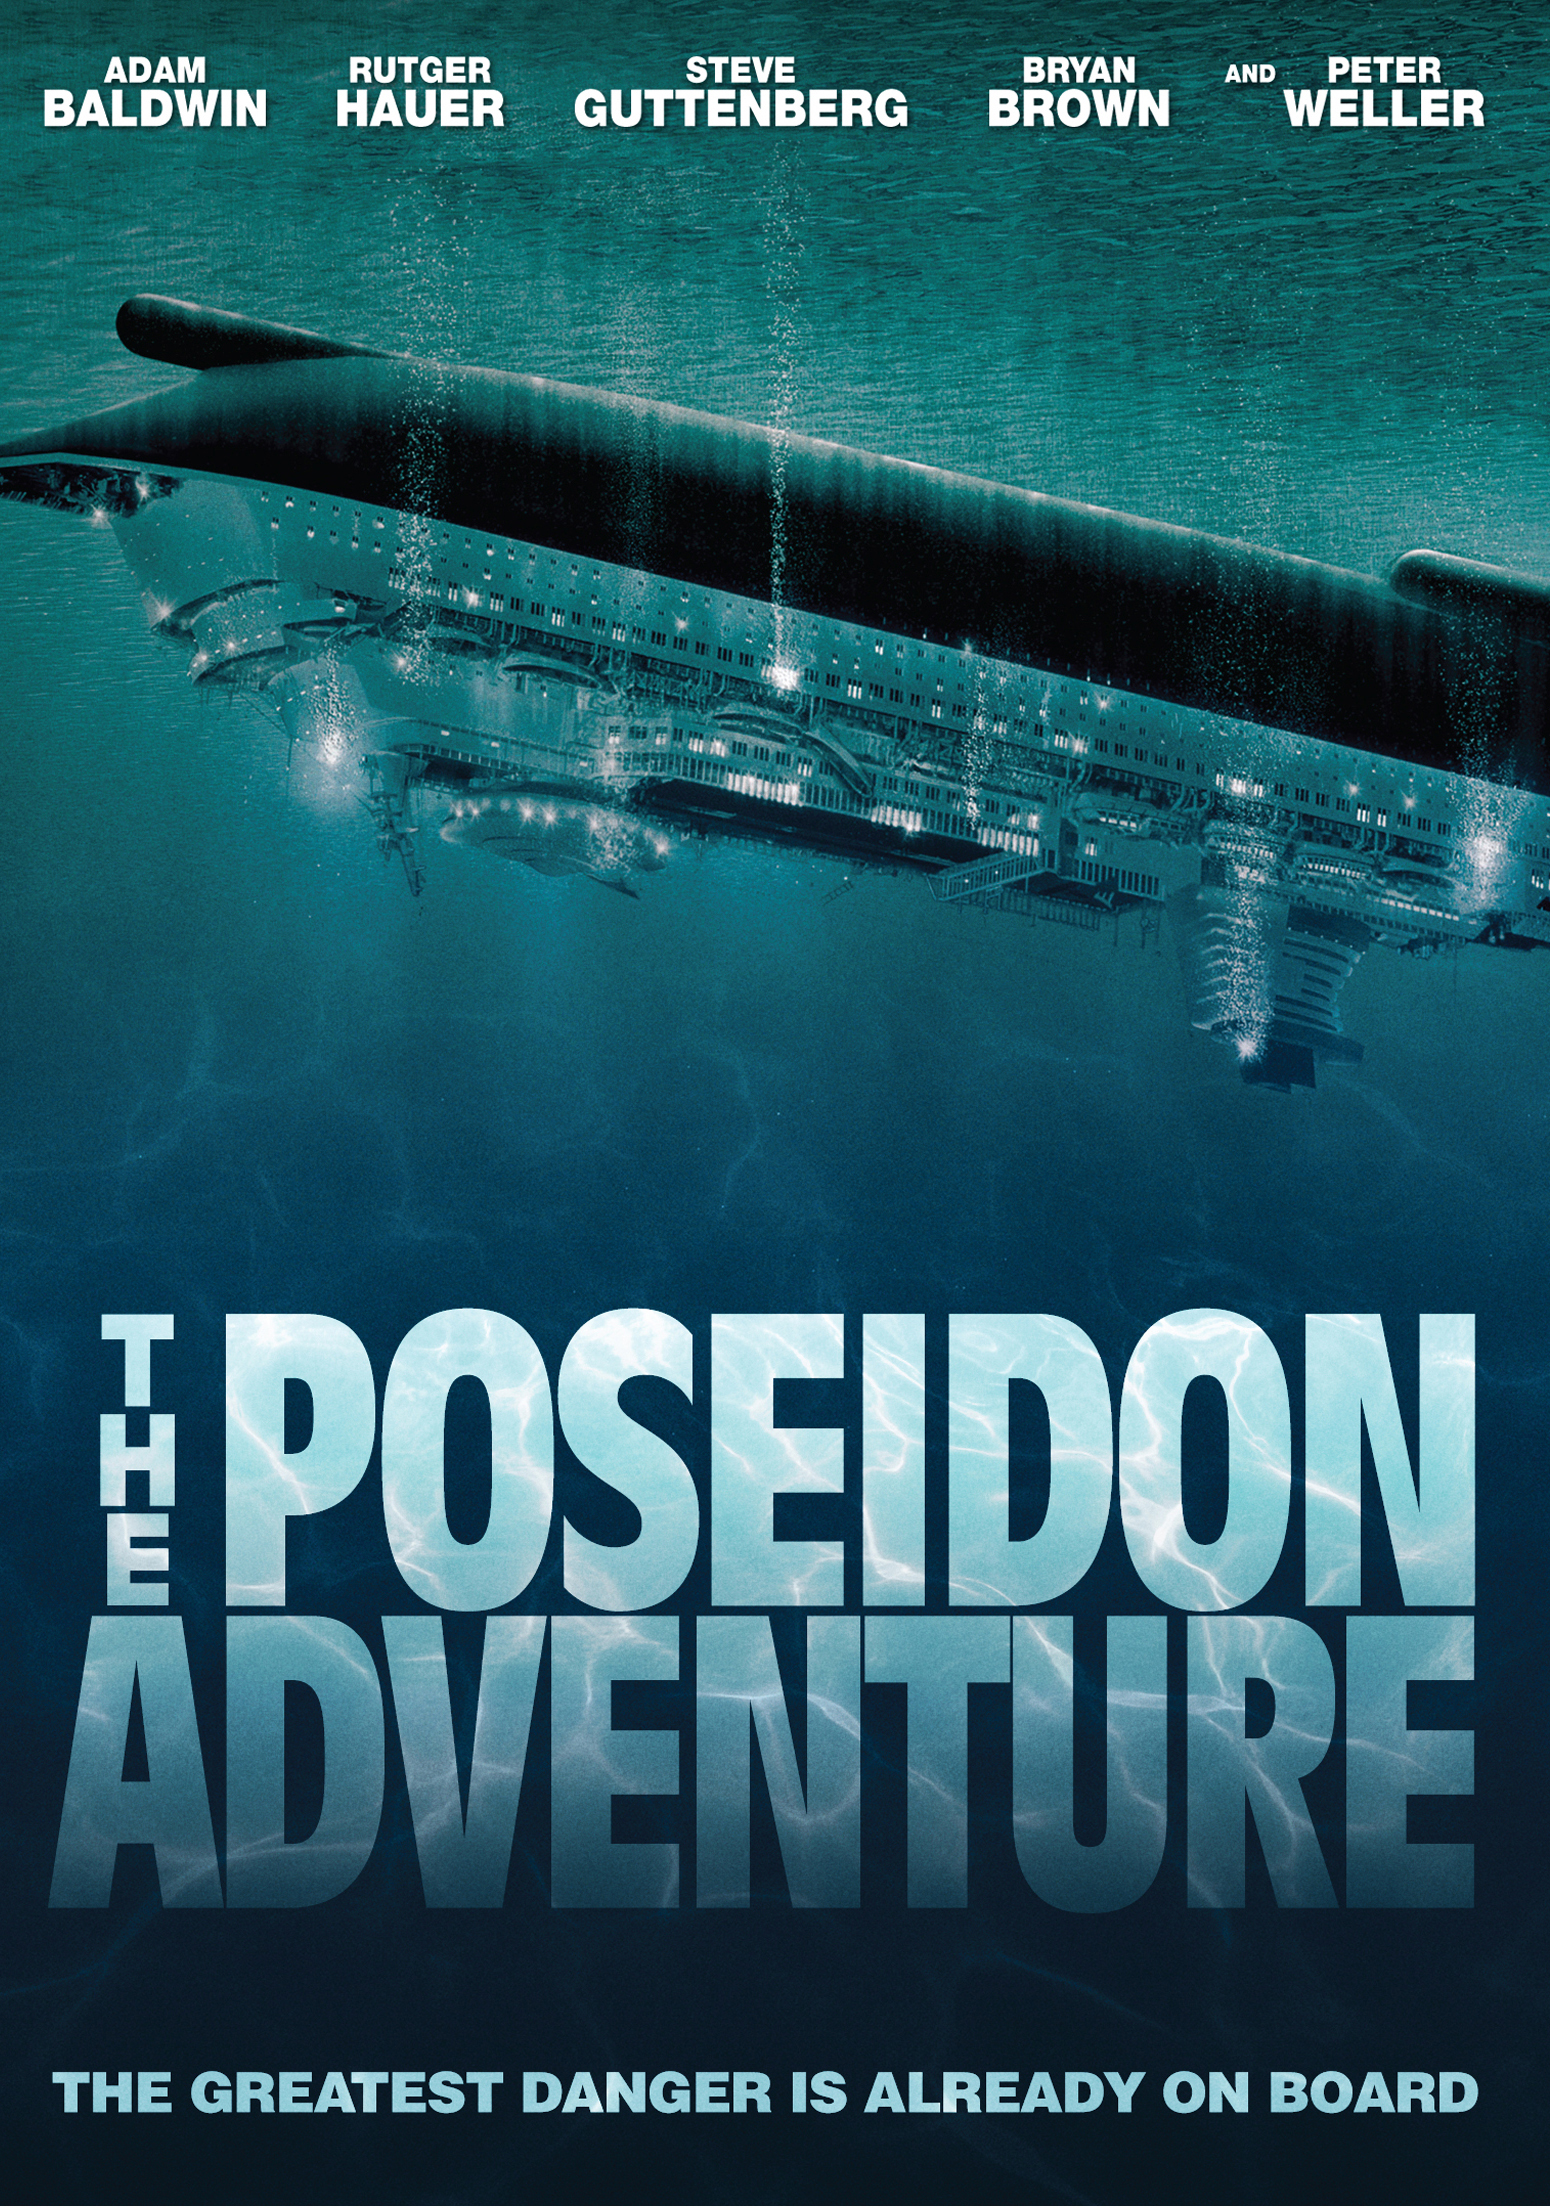 The Poseidon Adventure DVD Cover